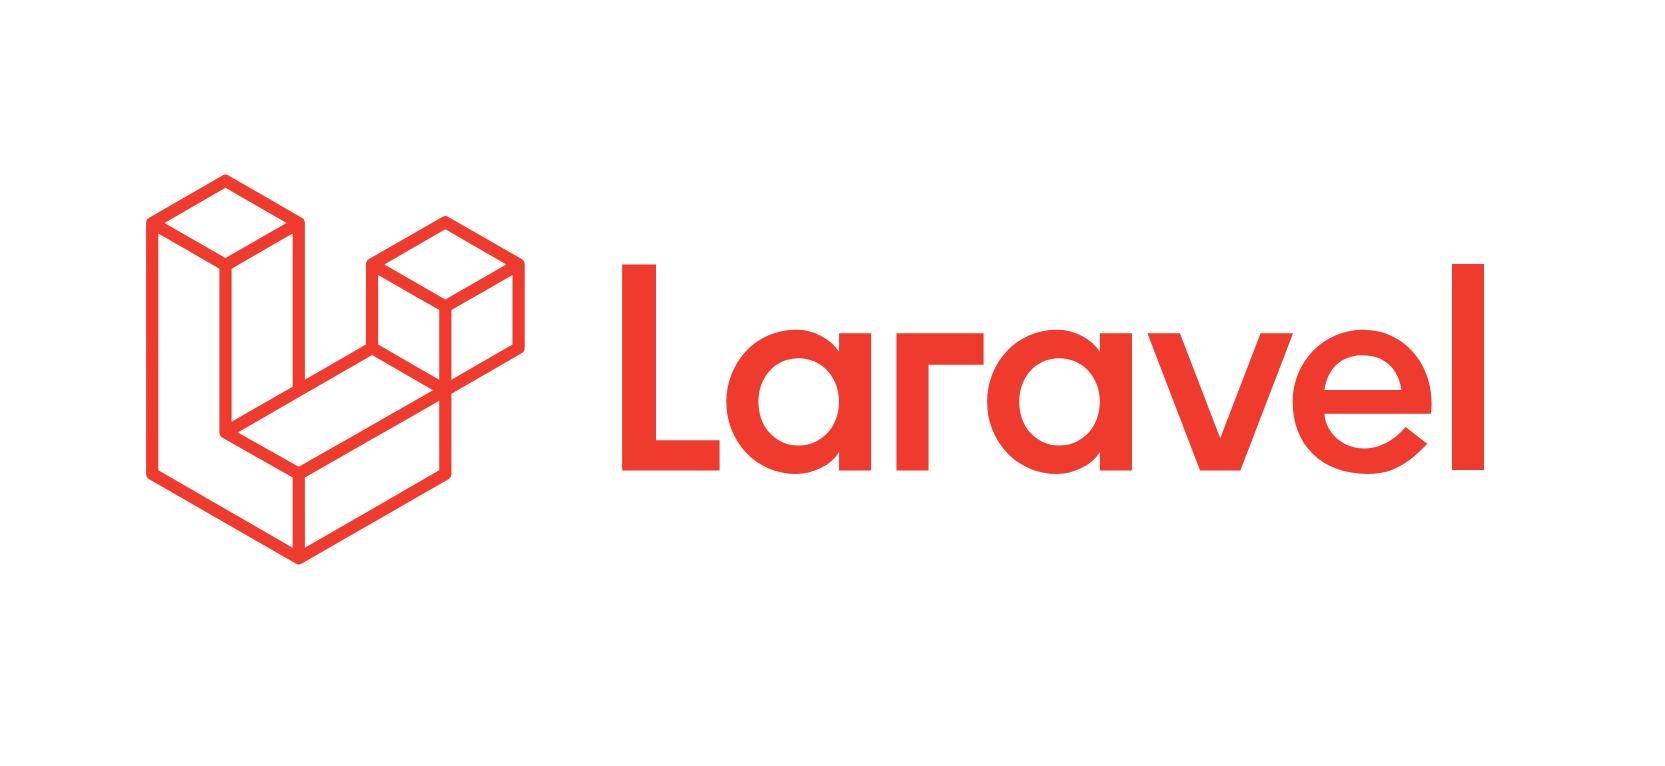 Serverless Laravel: Revolutionizing Cloud Application Development